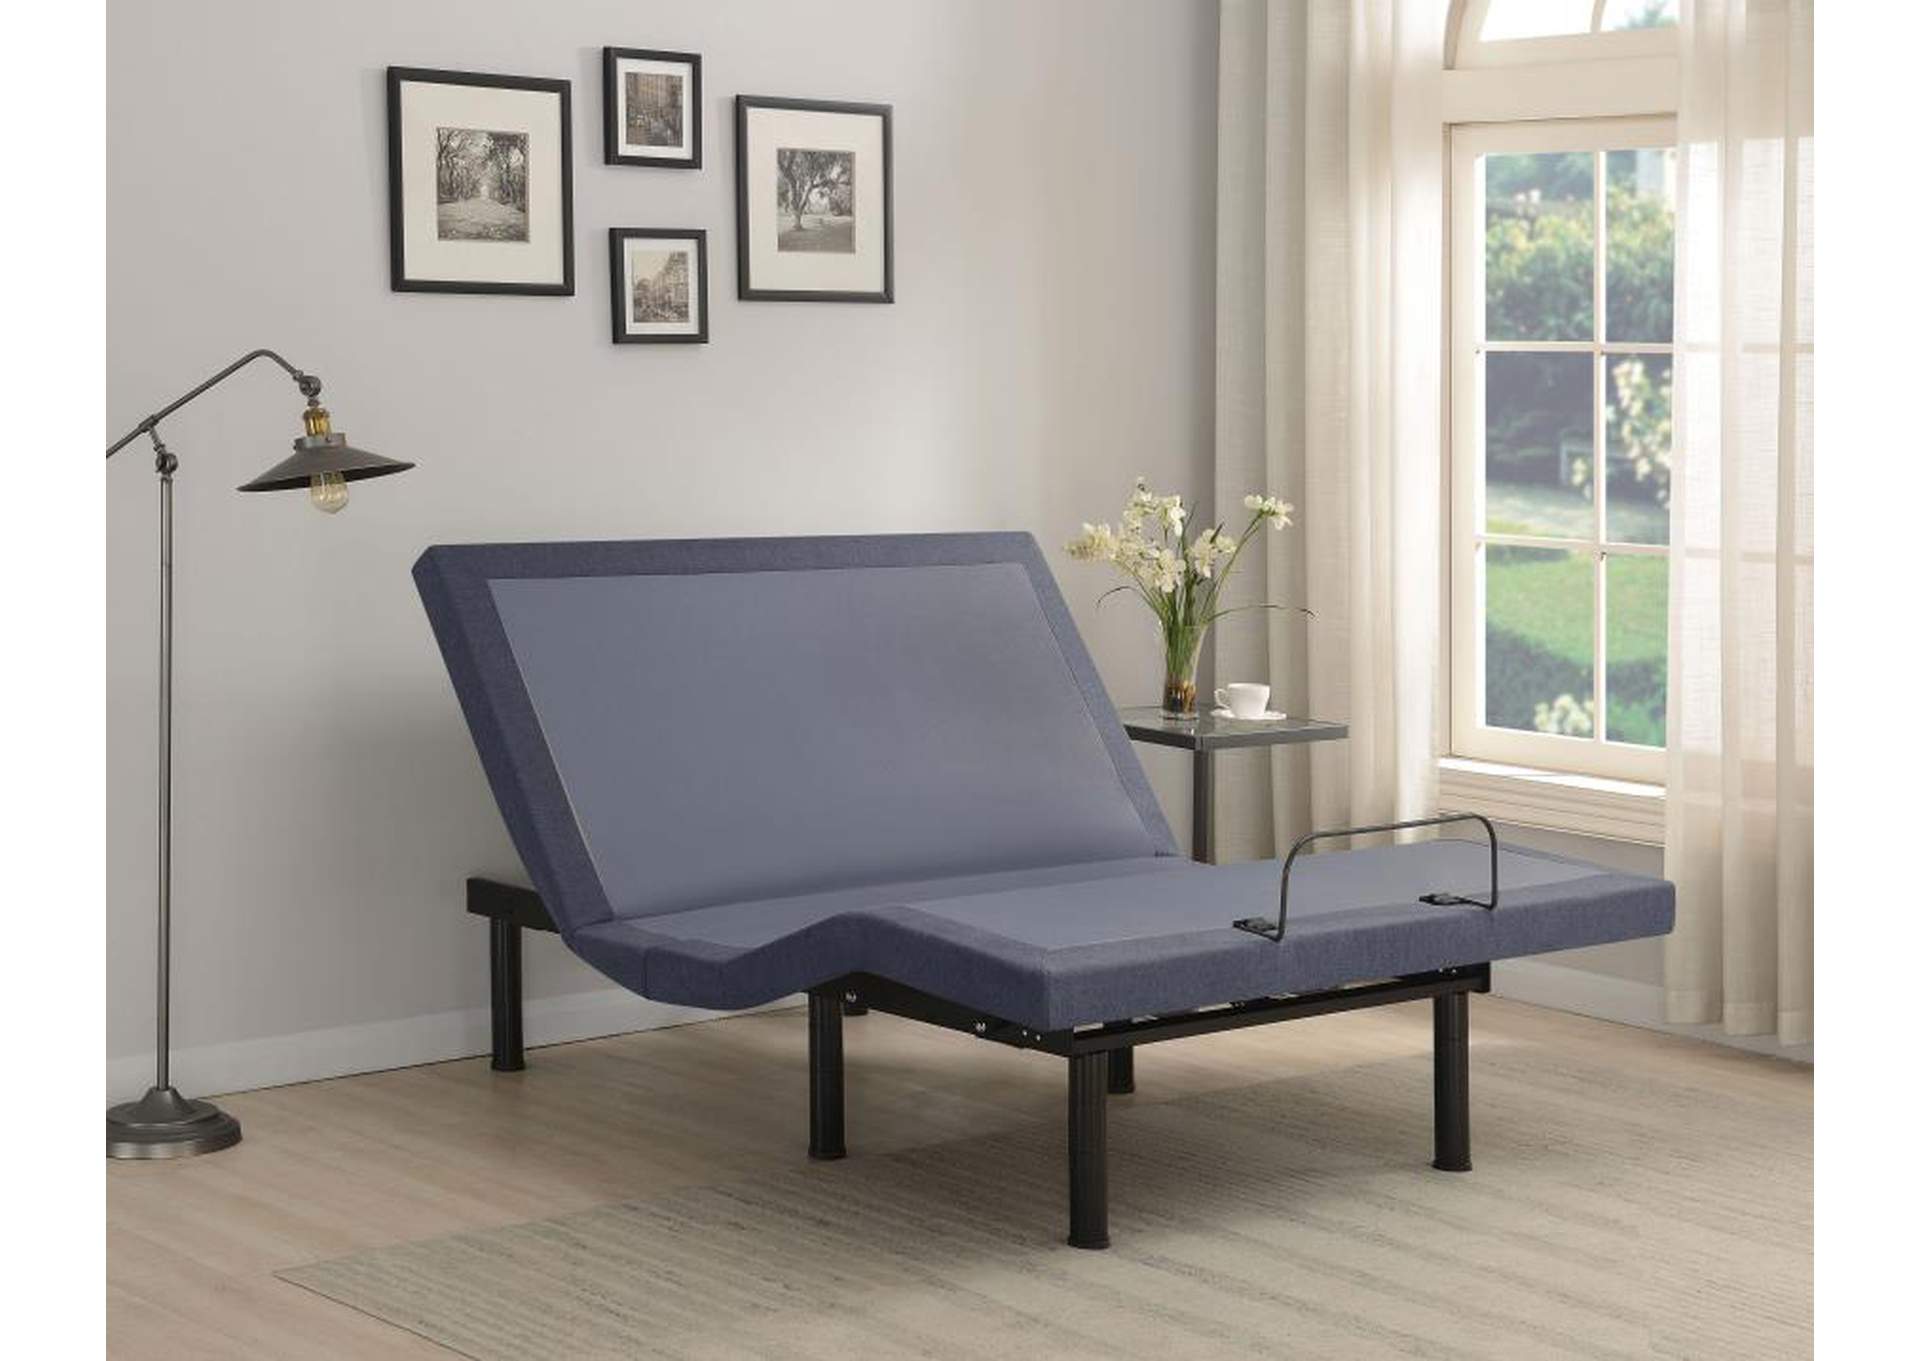 Clara California King Adjustable Bed Base Grey And Black,Coaster Furniture